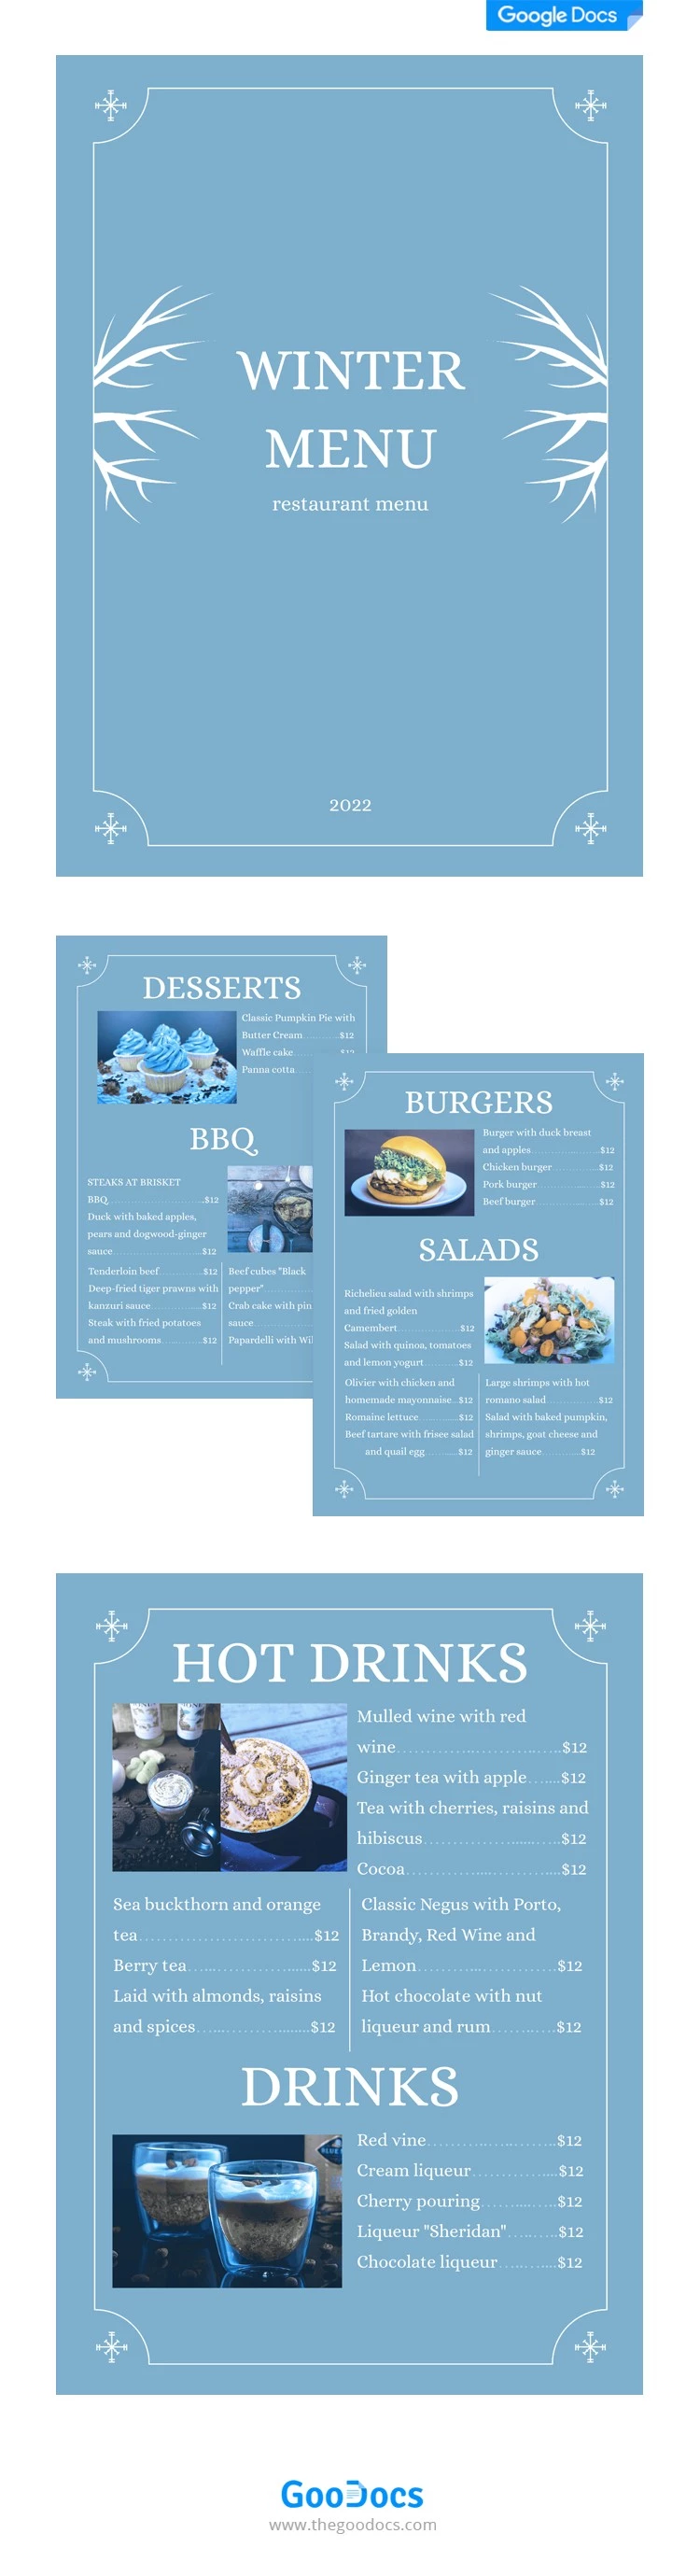 Winter Restaurant Menü - free Google Docs Template - 10062074